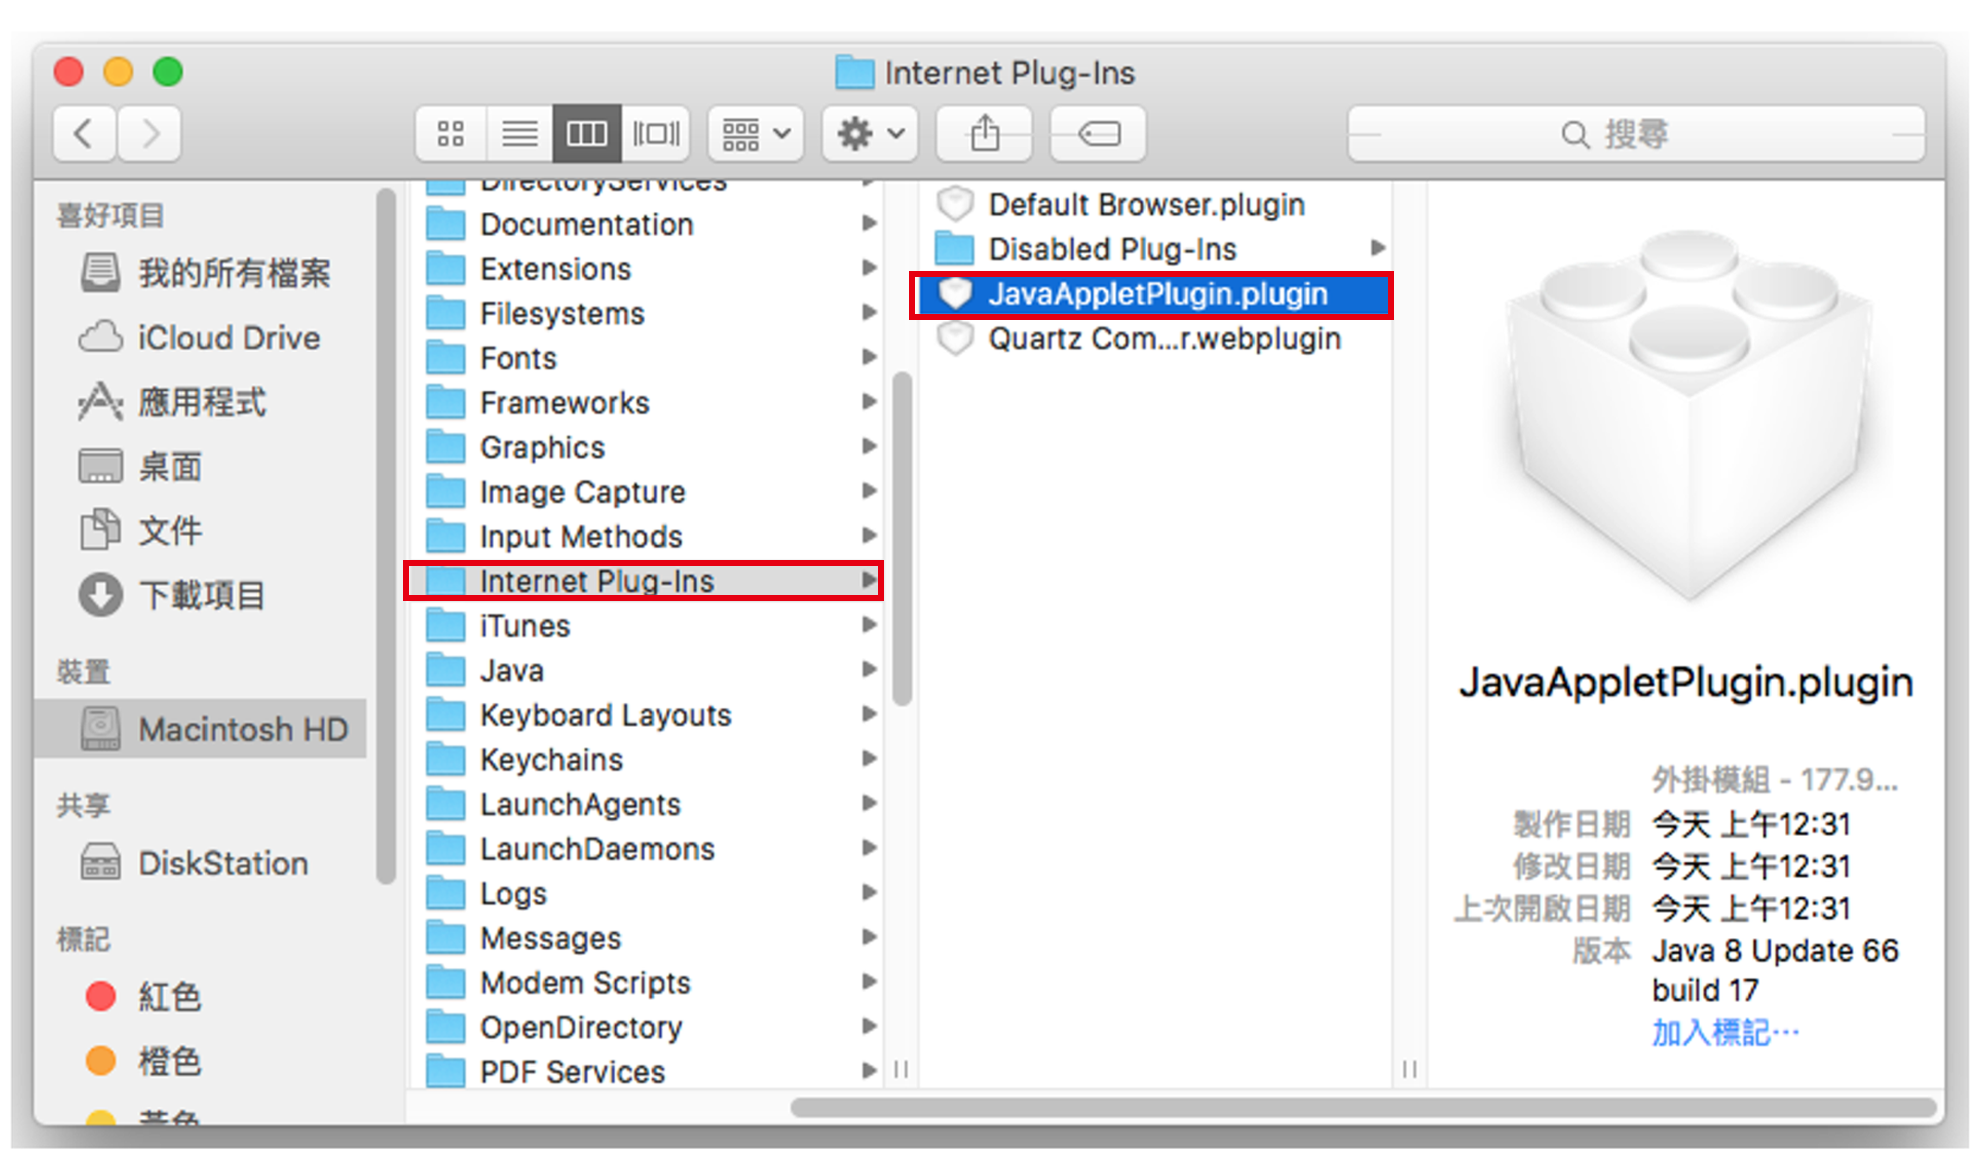 Javaappletplugin plugin for mac